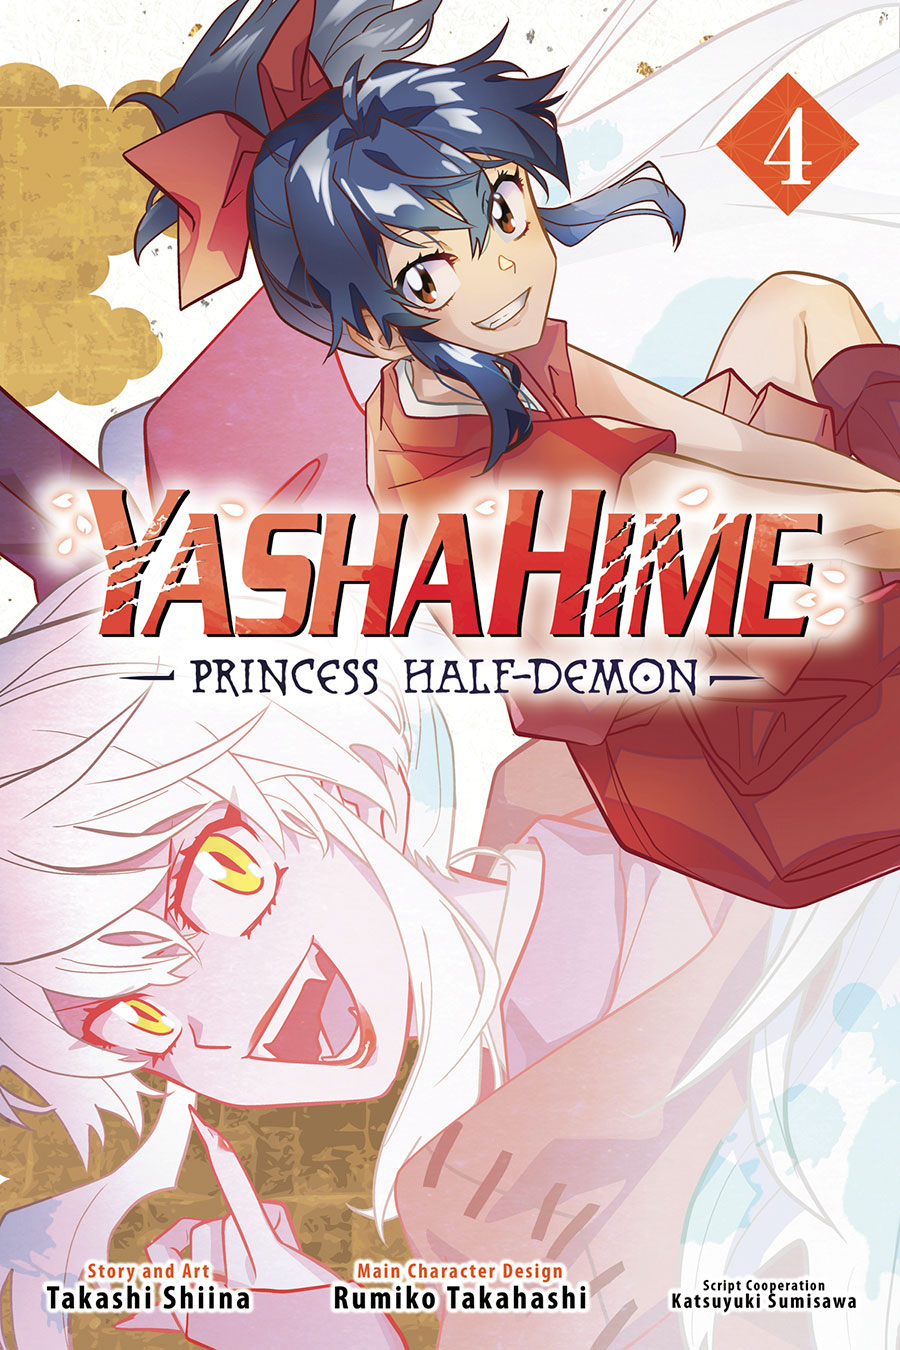 YashaHime Princess Half-Demon Vol 4 GN